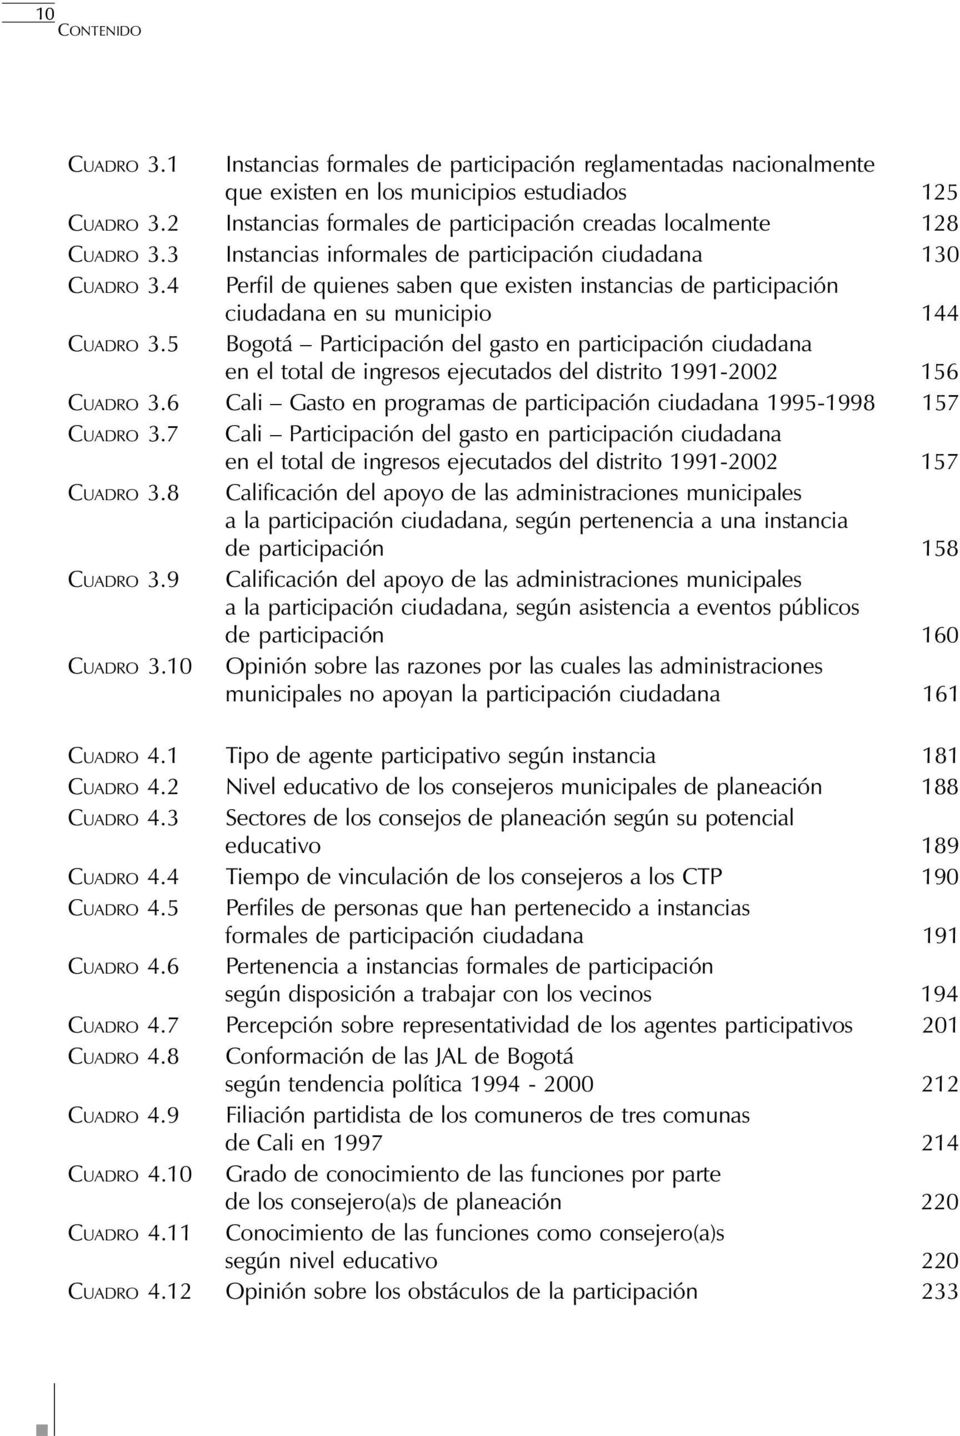 5 Bogotá Participació del gasto e participació ciudadaa e el total de igresos ejecutados del distrito 1991-2002 156 CUADRO 3.6 Cali Gasto e programas de participació ciudadaa 1995-1998 157 CUADRO 3.